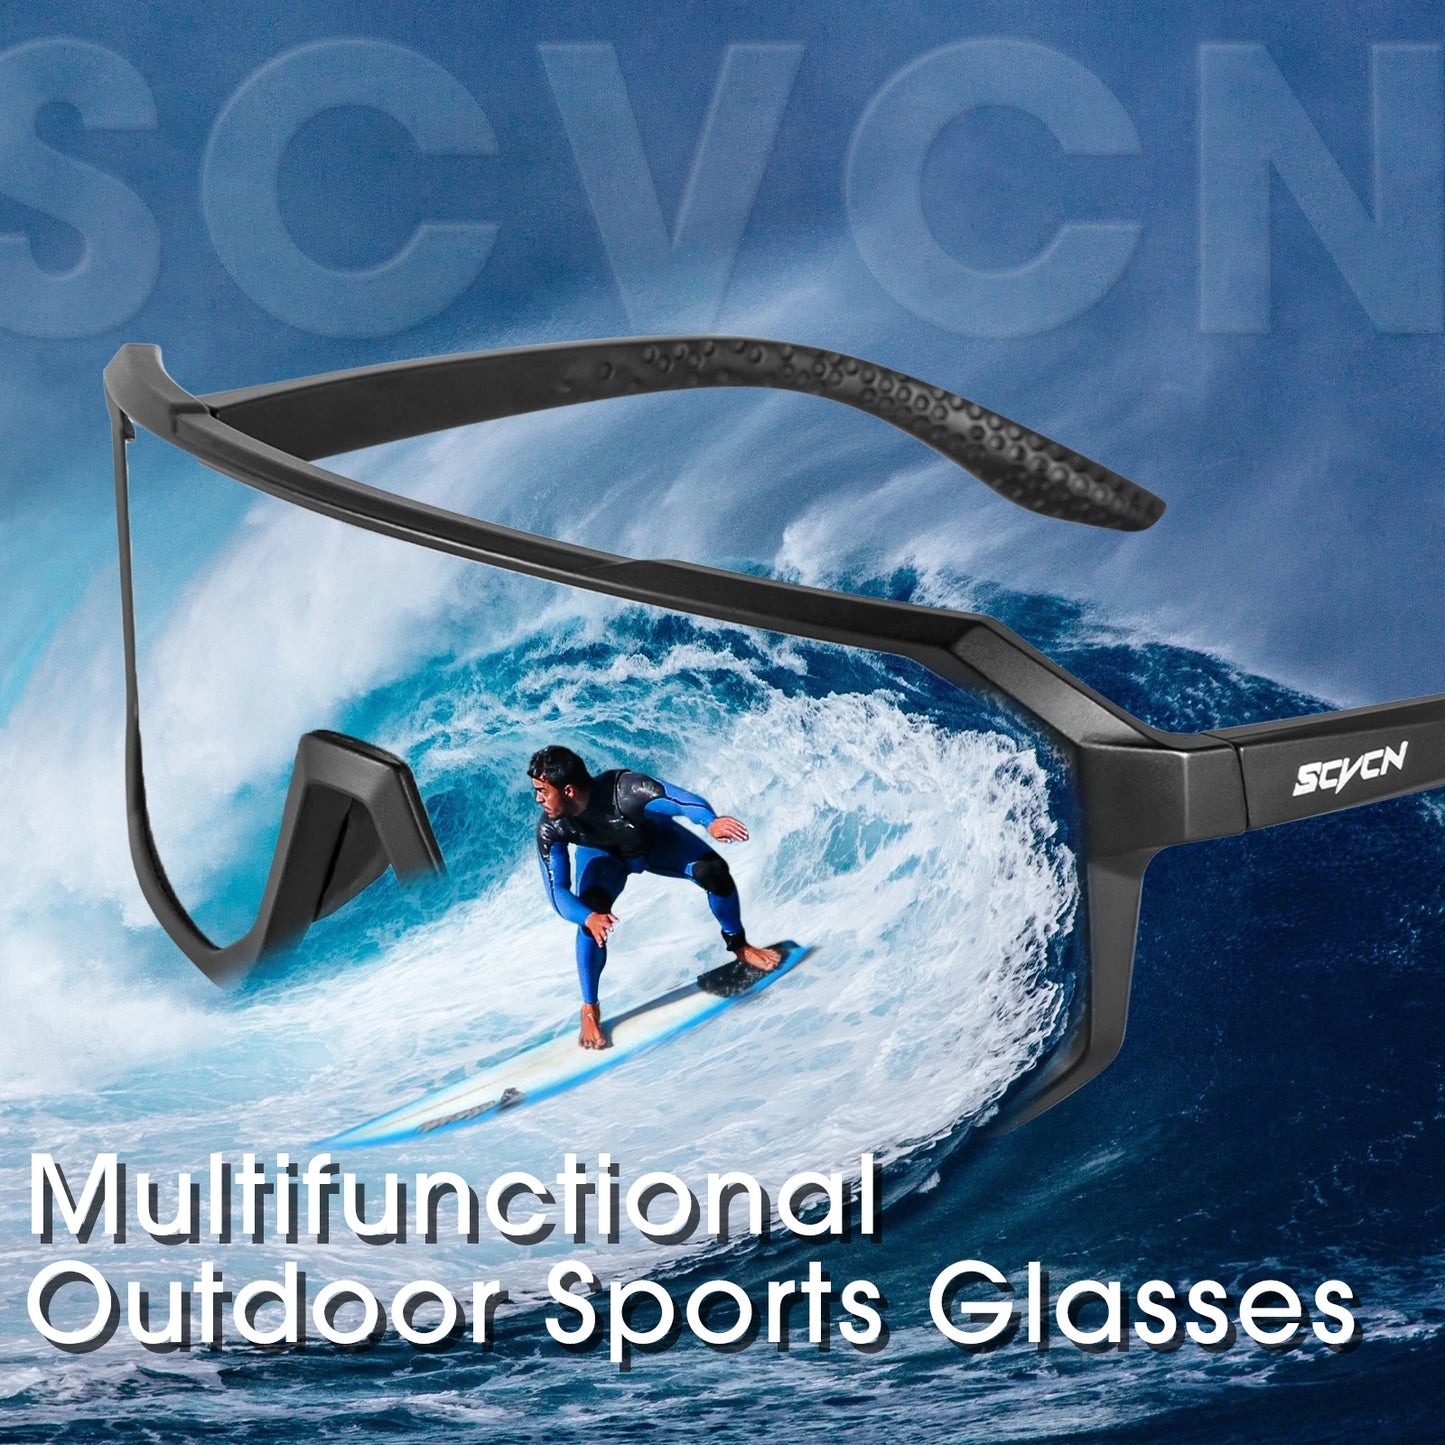 Outdoor Sports running UV400 Hiking Eyewear sunglasses